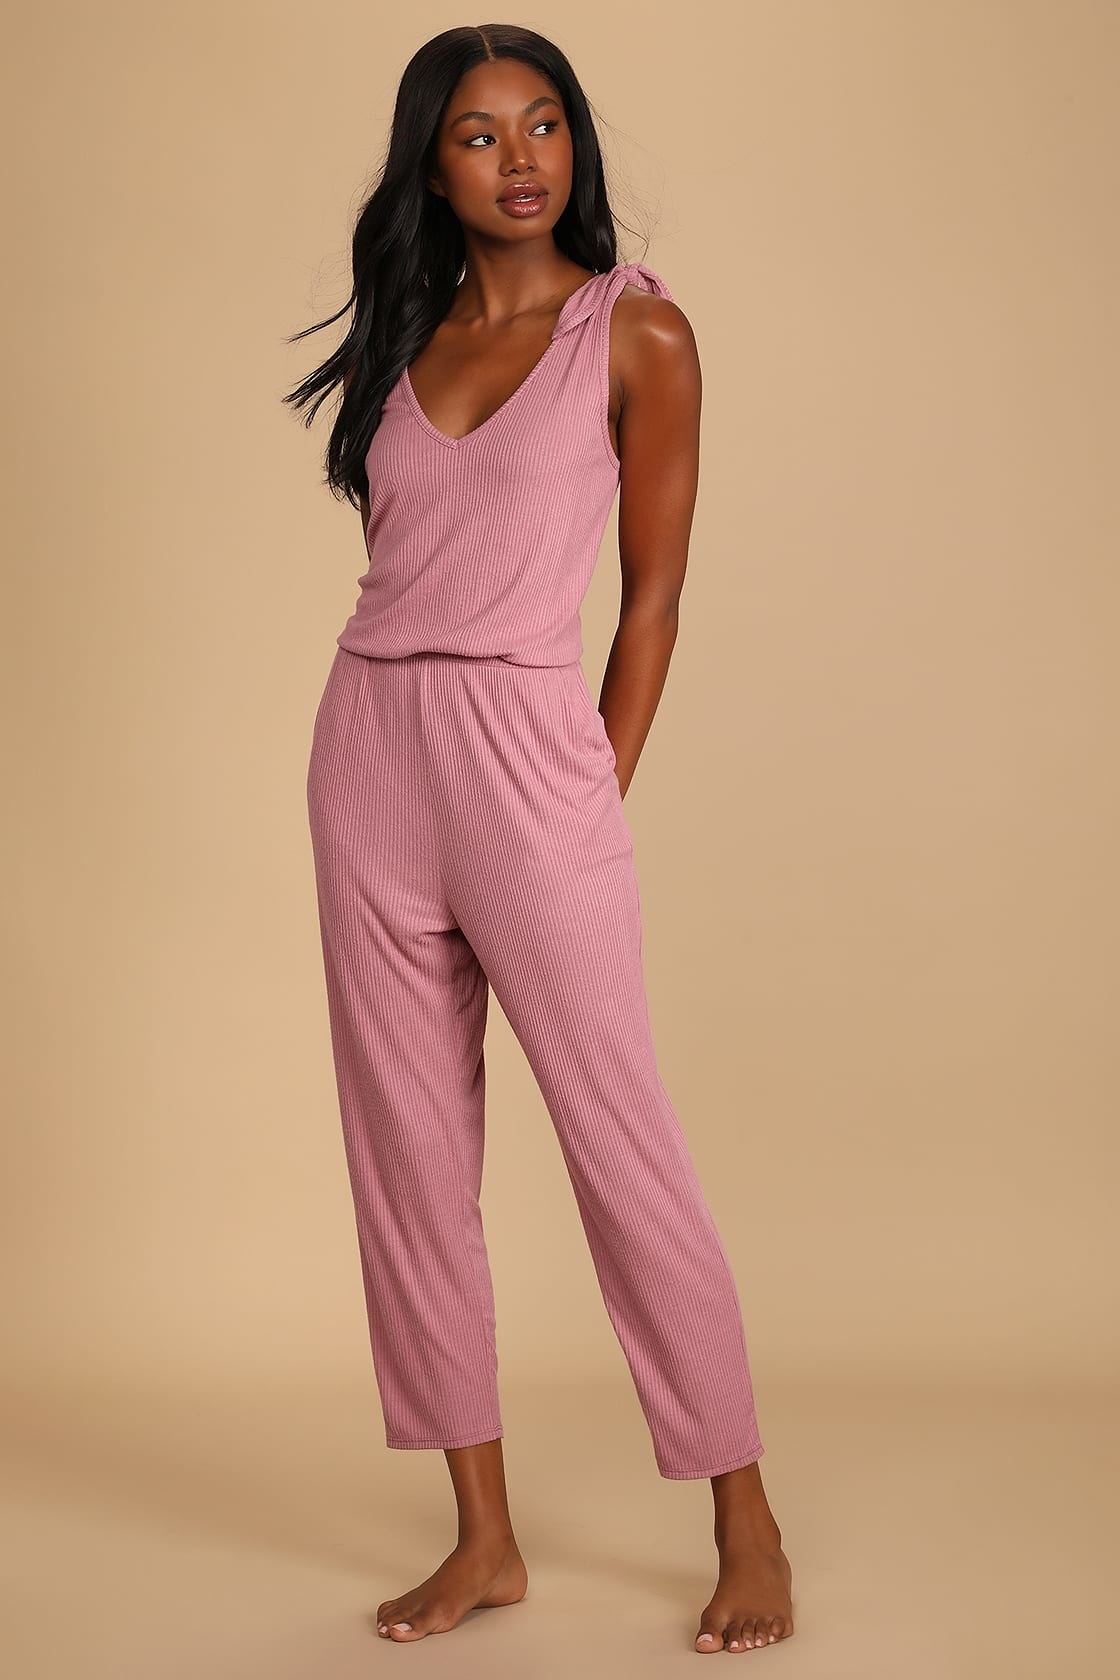 Model wearing pink sleeveless jumpsuit